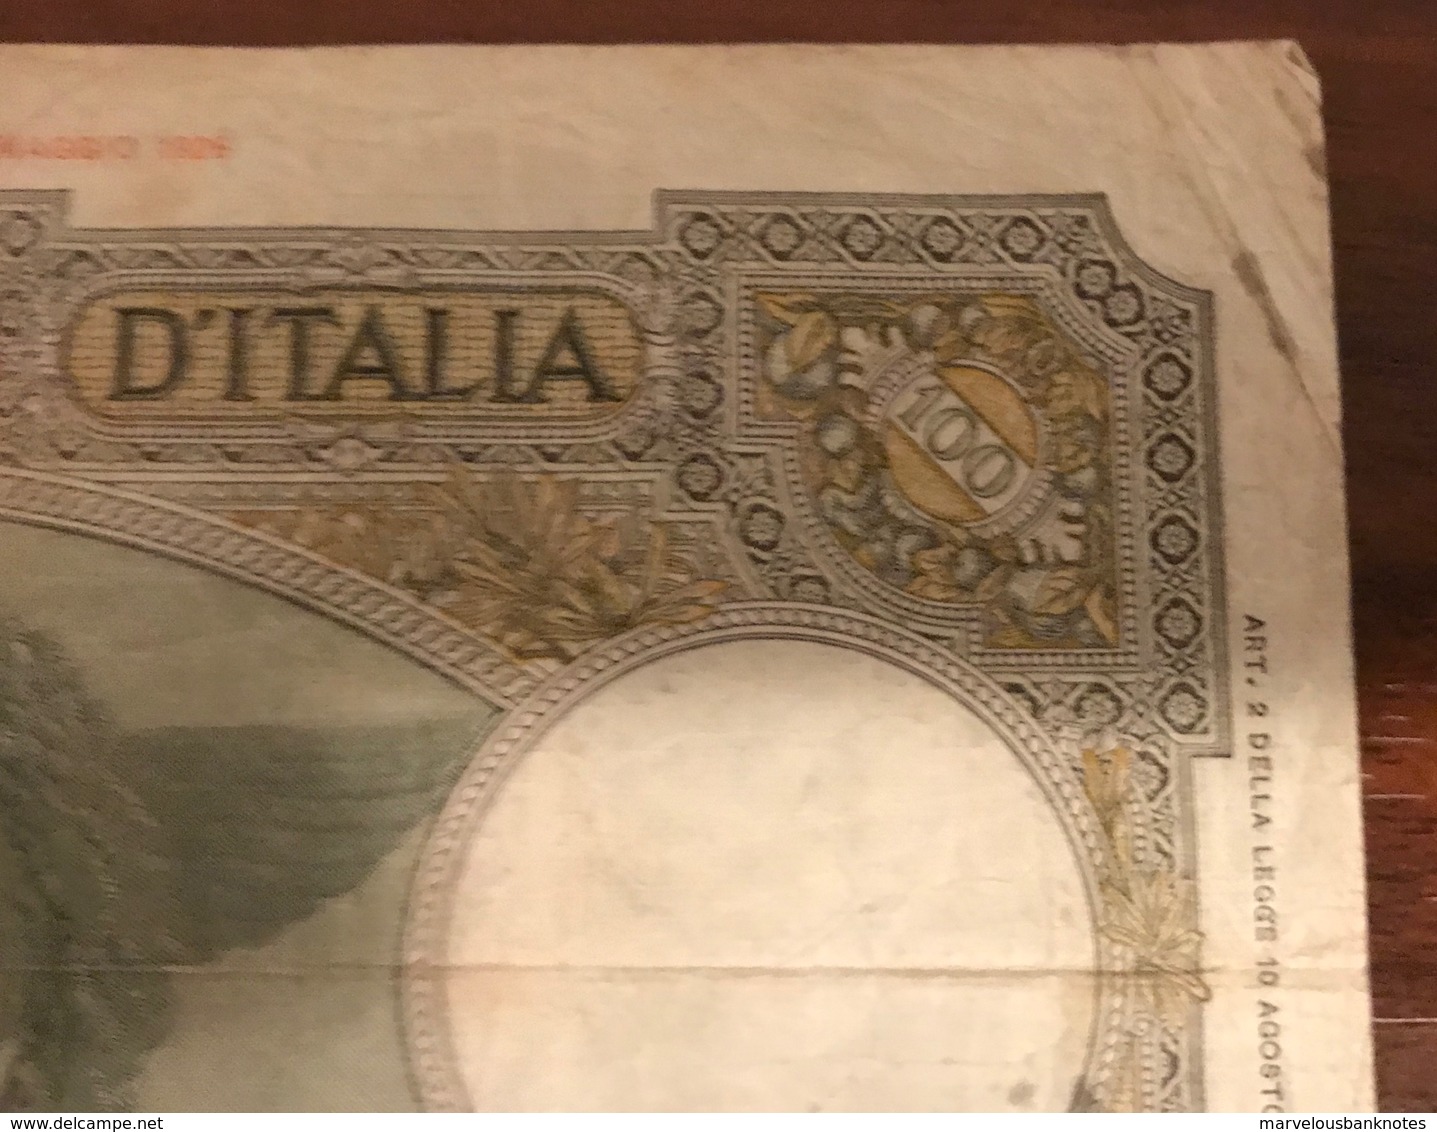 Rare 50 Lire 1938 Italian East Africa Special Edition - 50 Lire Serie Speciale Africa orientale Italiana 1938